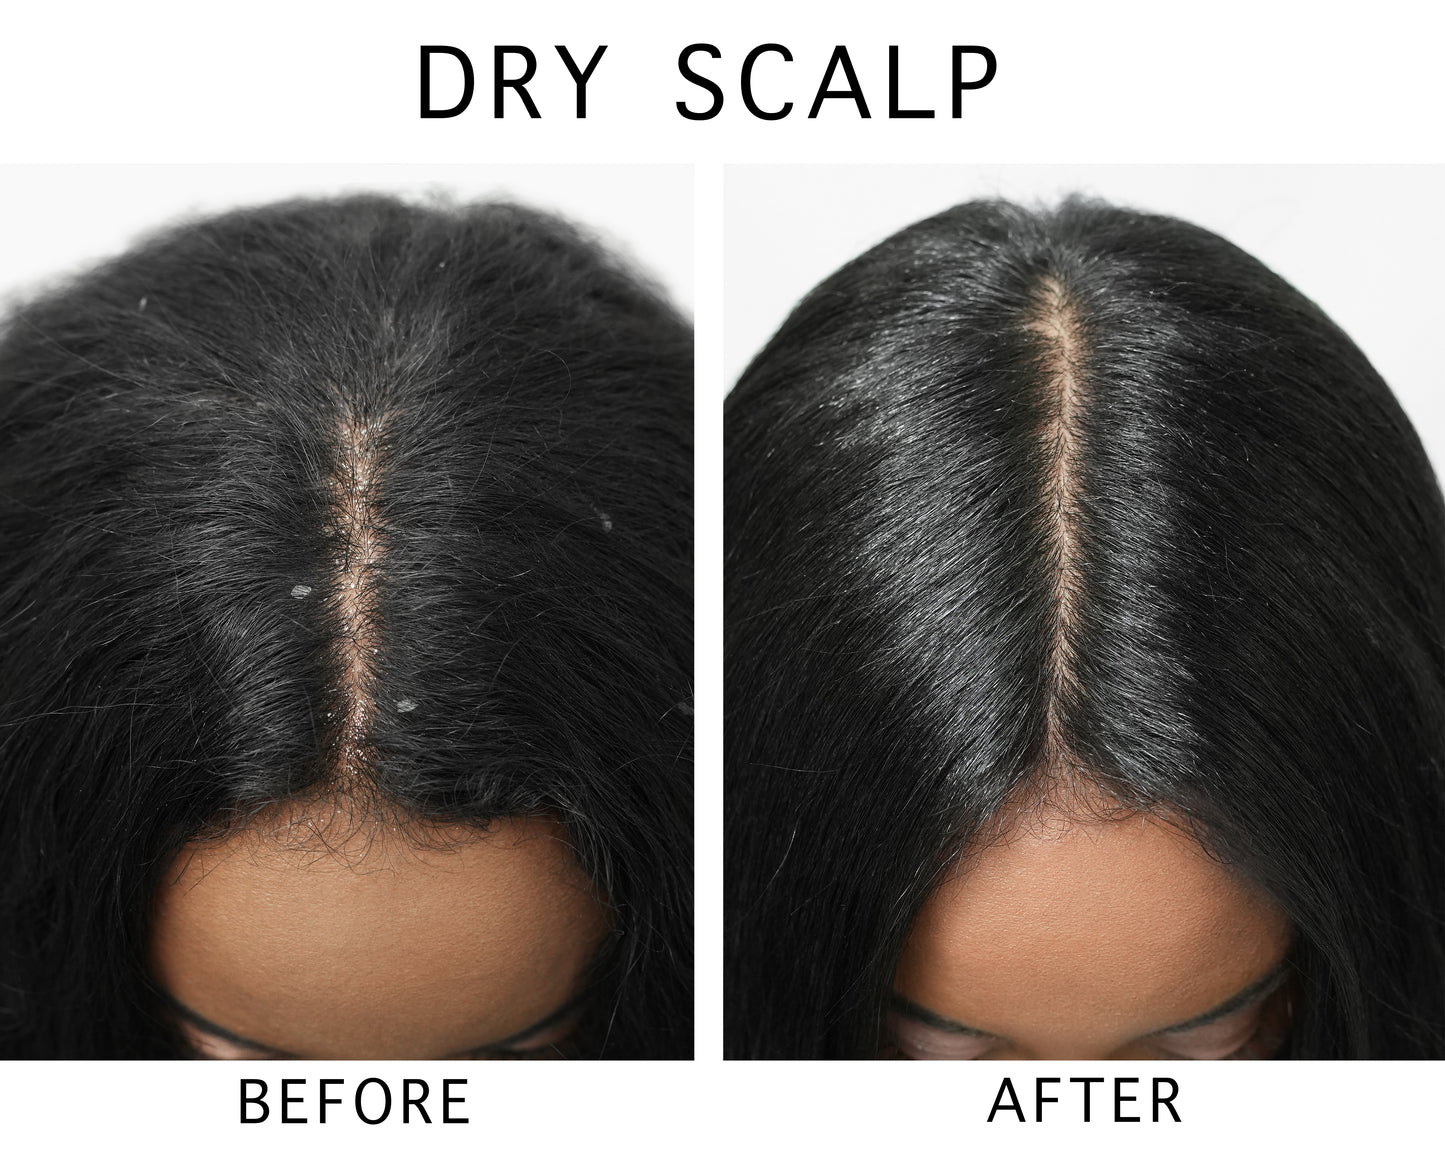 ScalpFacial™ for Dry Scalp & Scalp Massage Brush Kit